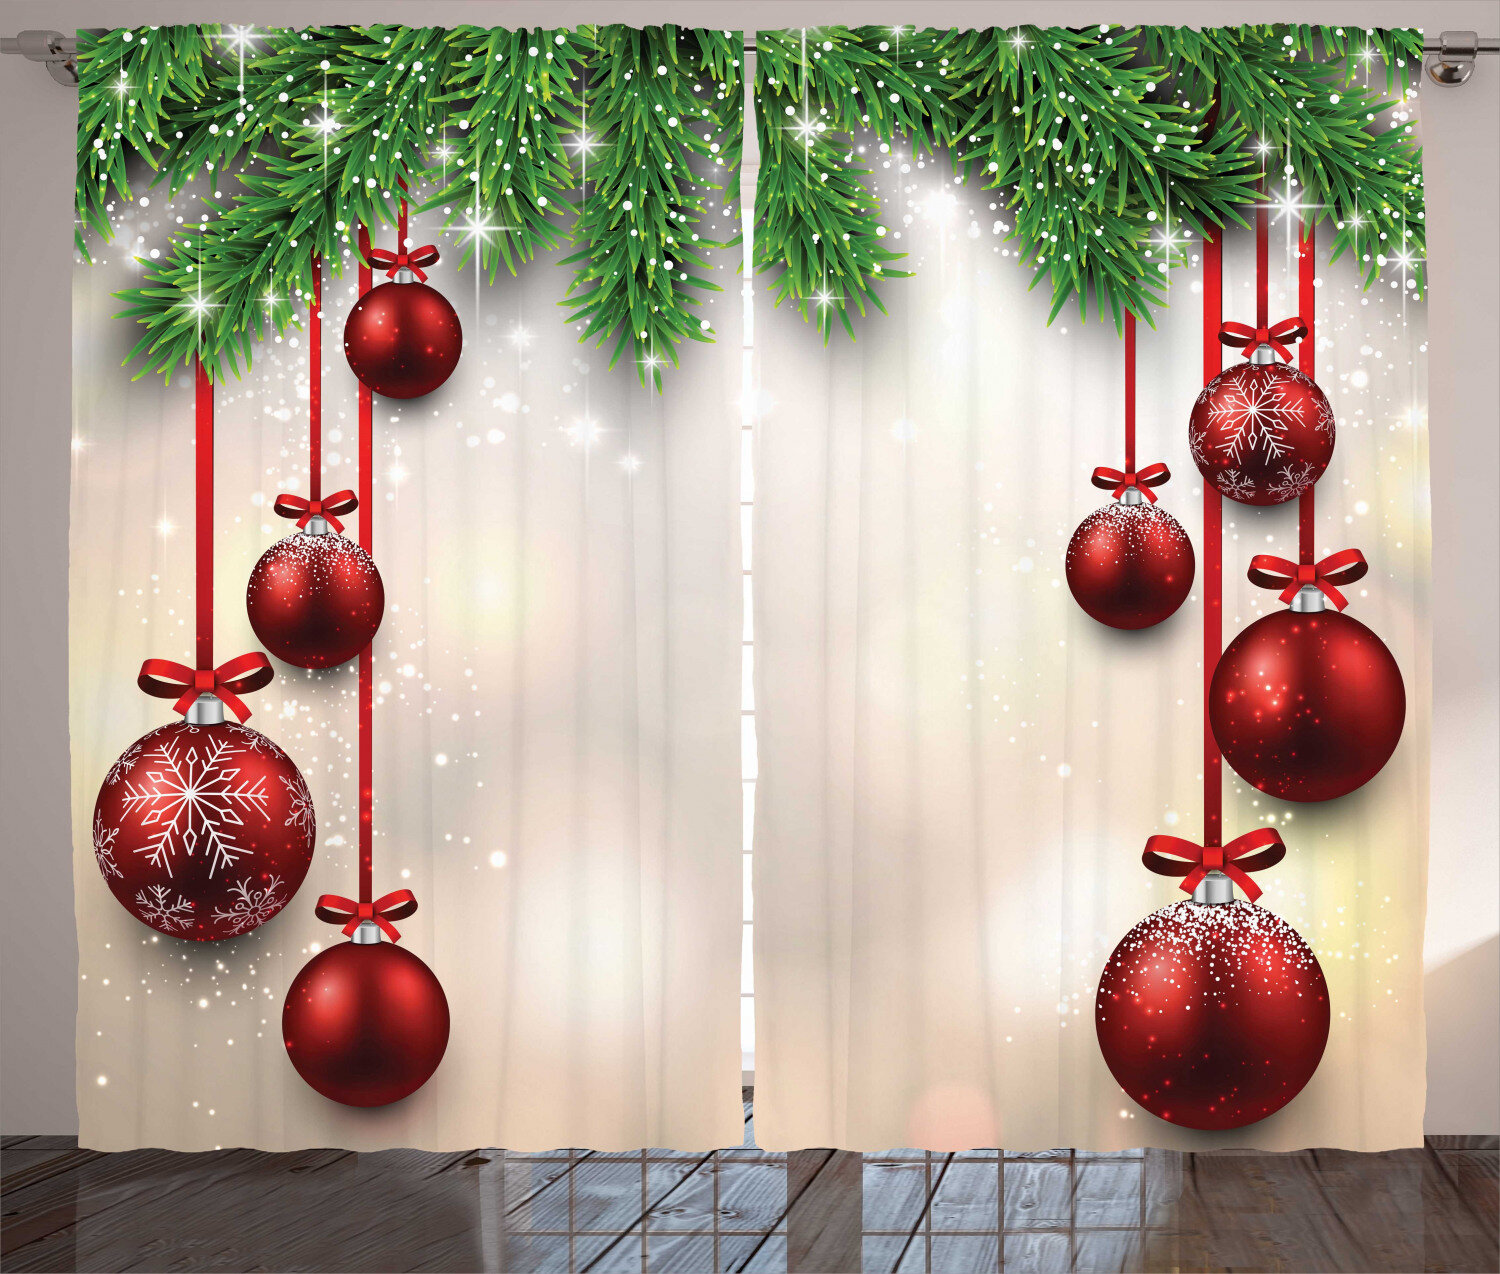 2021 New Year Santa Claus Hats Curtains Window Valance Christmas Decoration